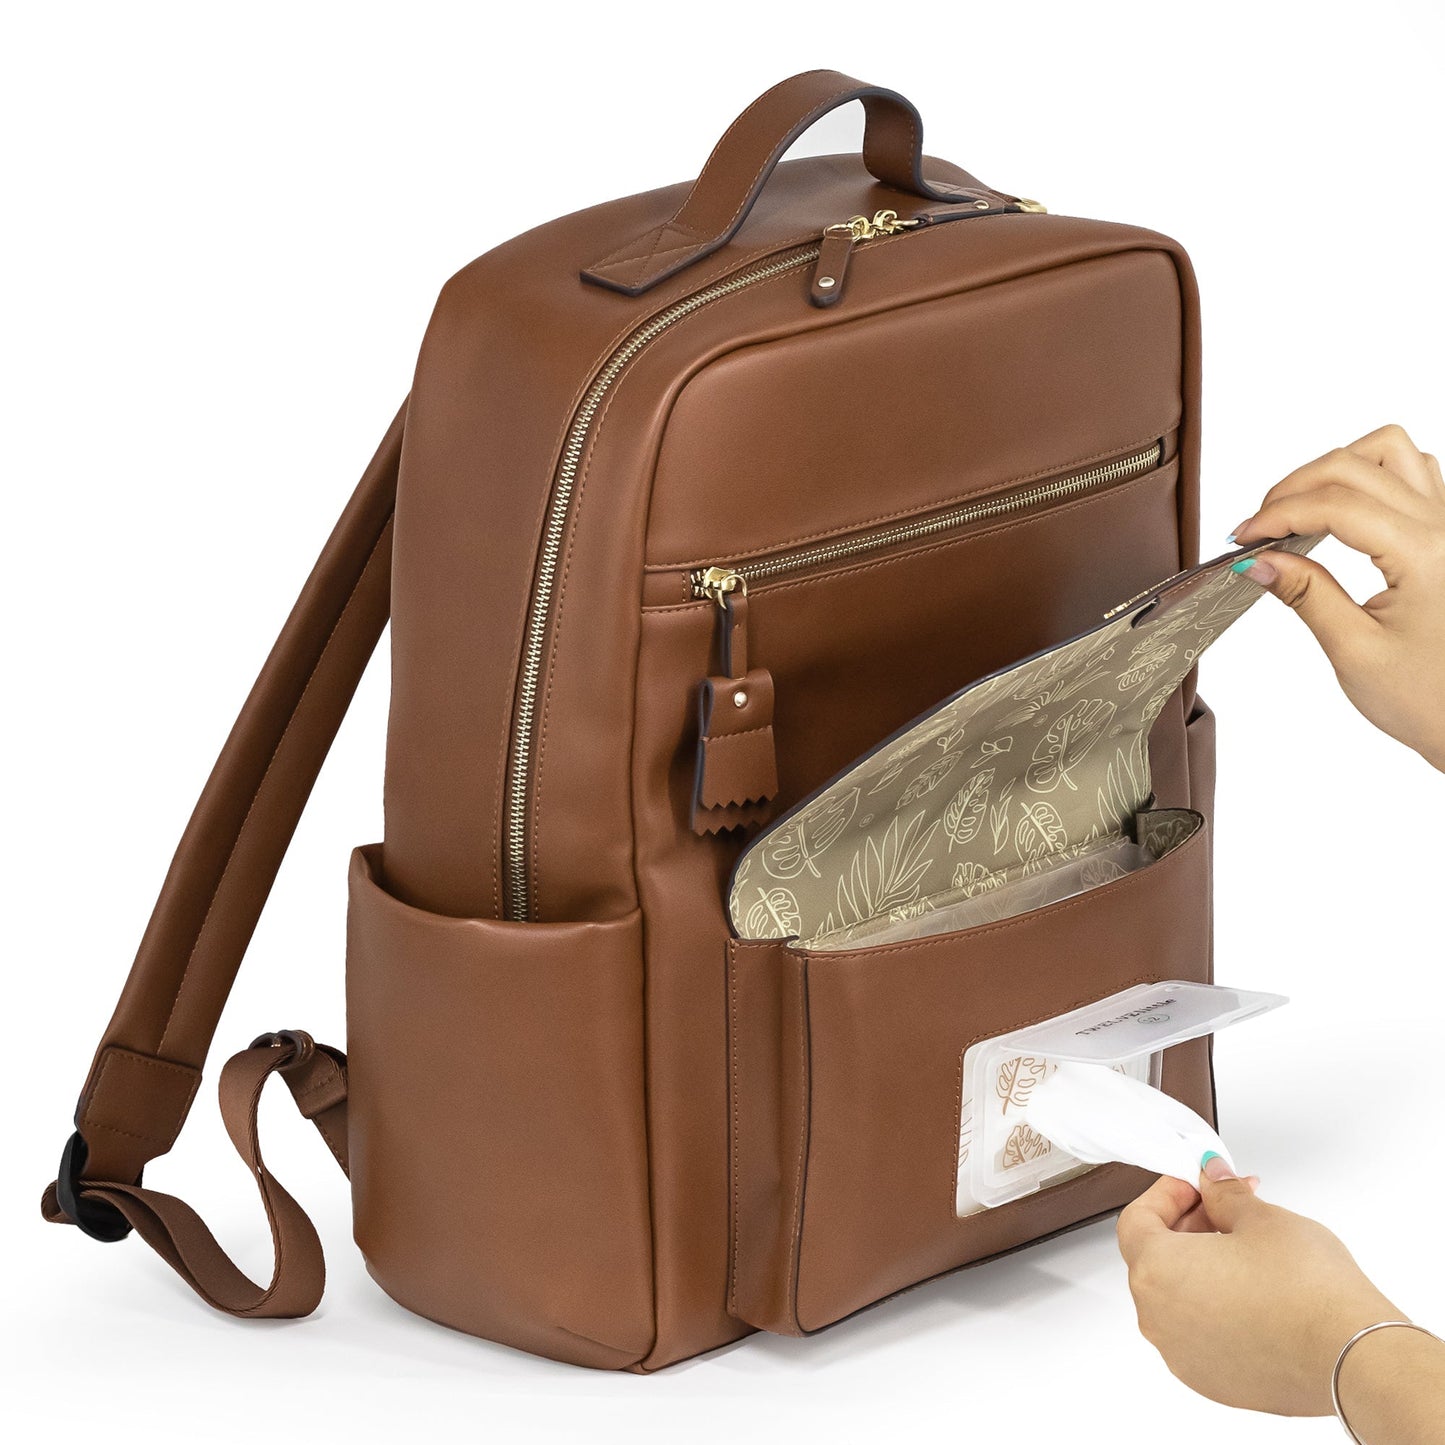 PEEK A BOO backpack תיק גב |חום| תיק גב